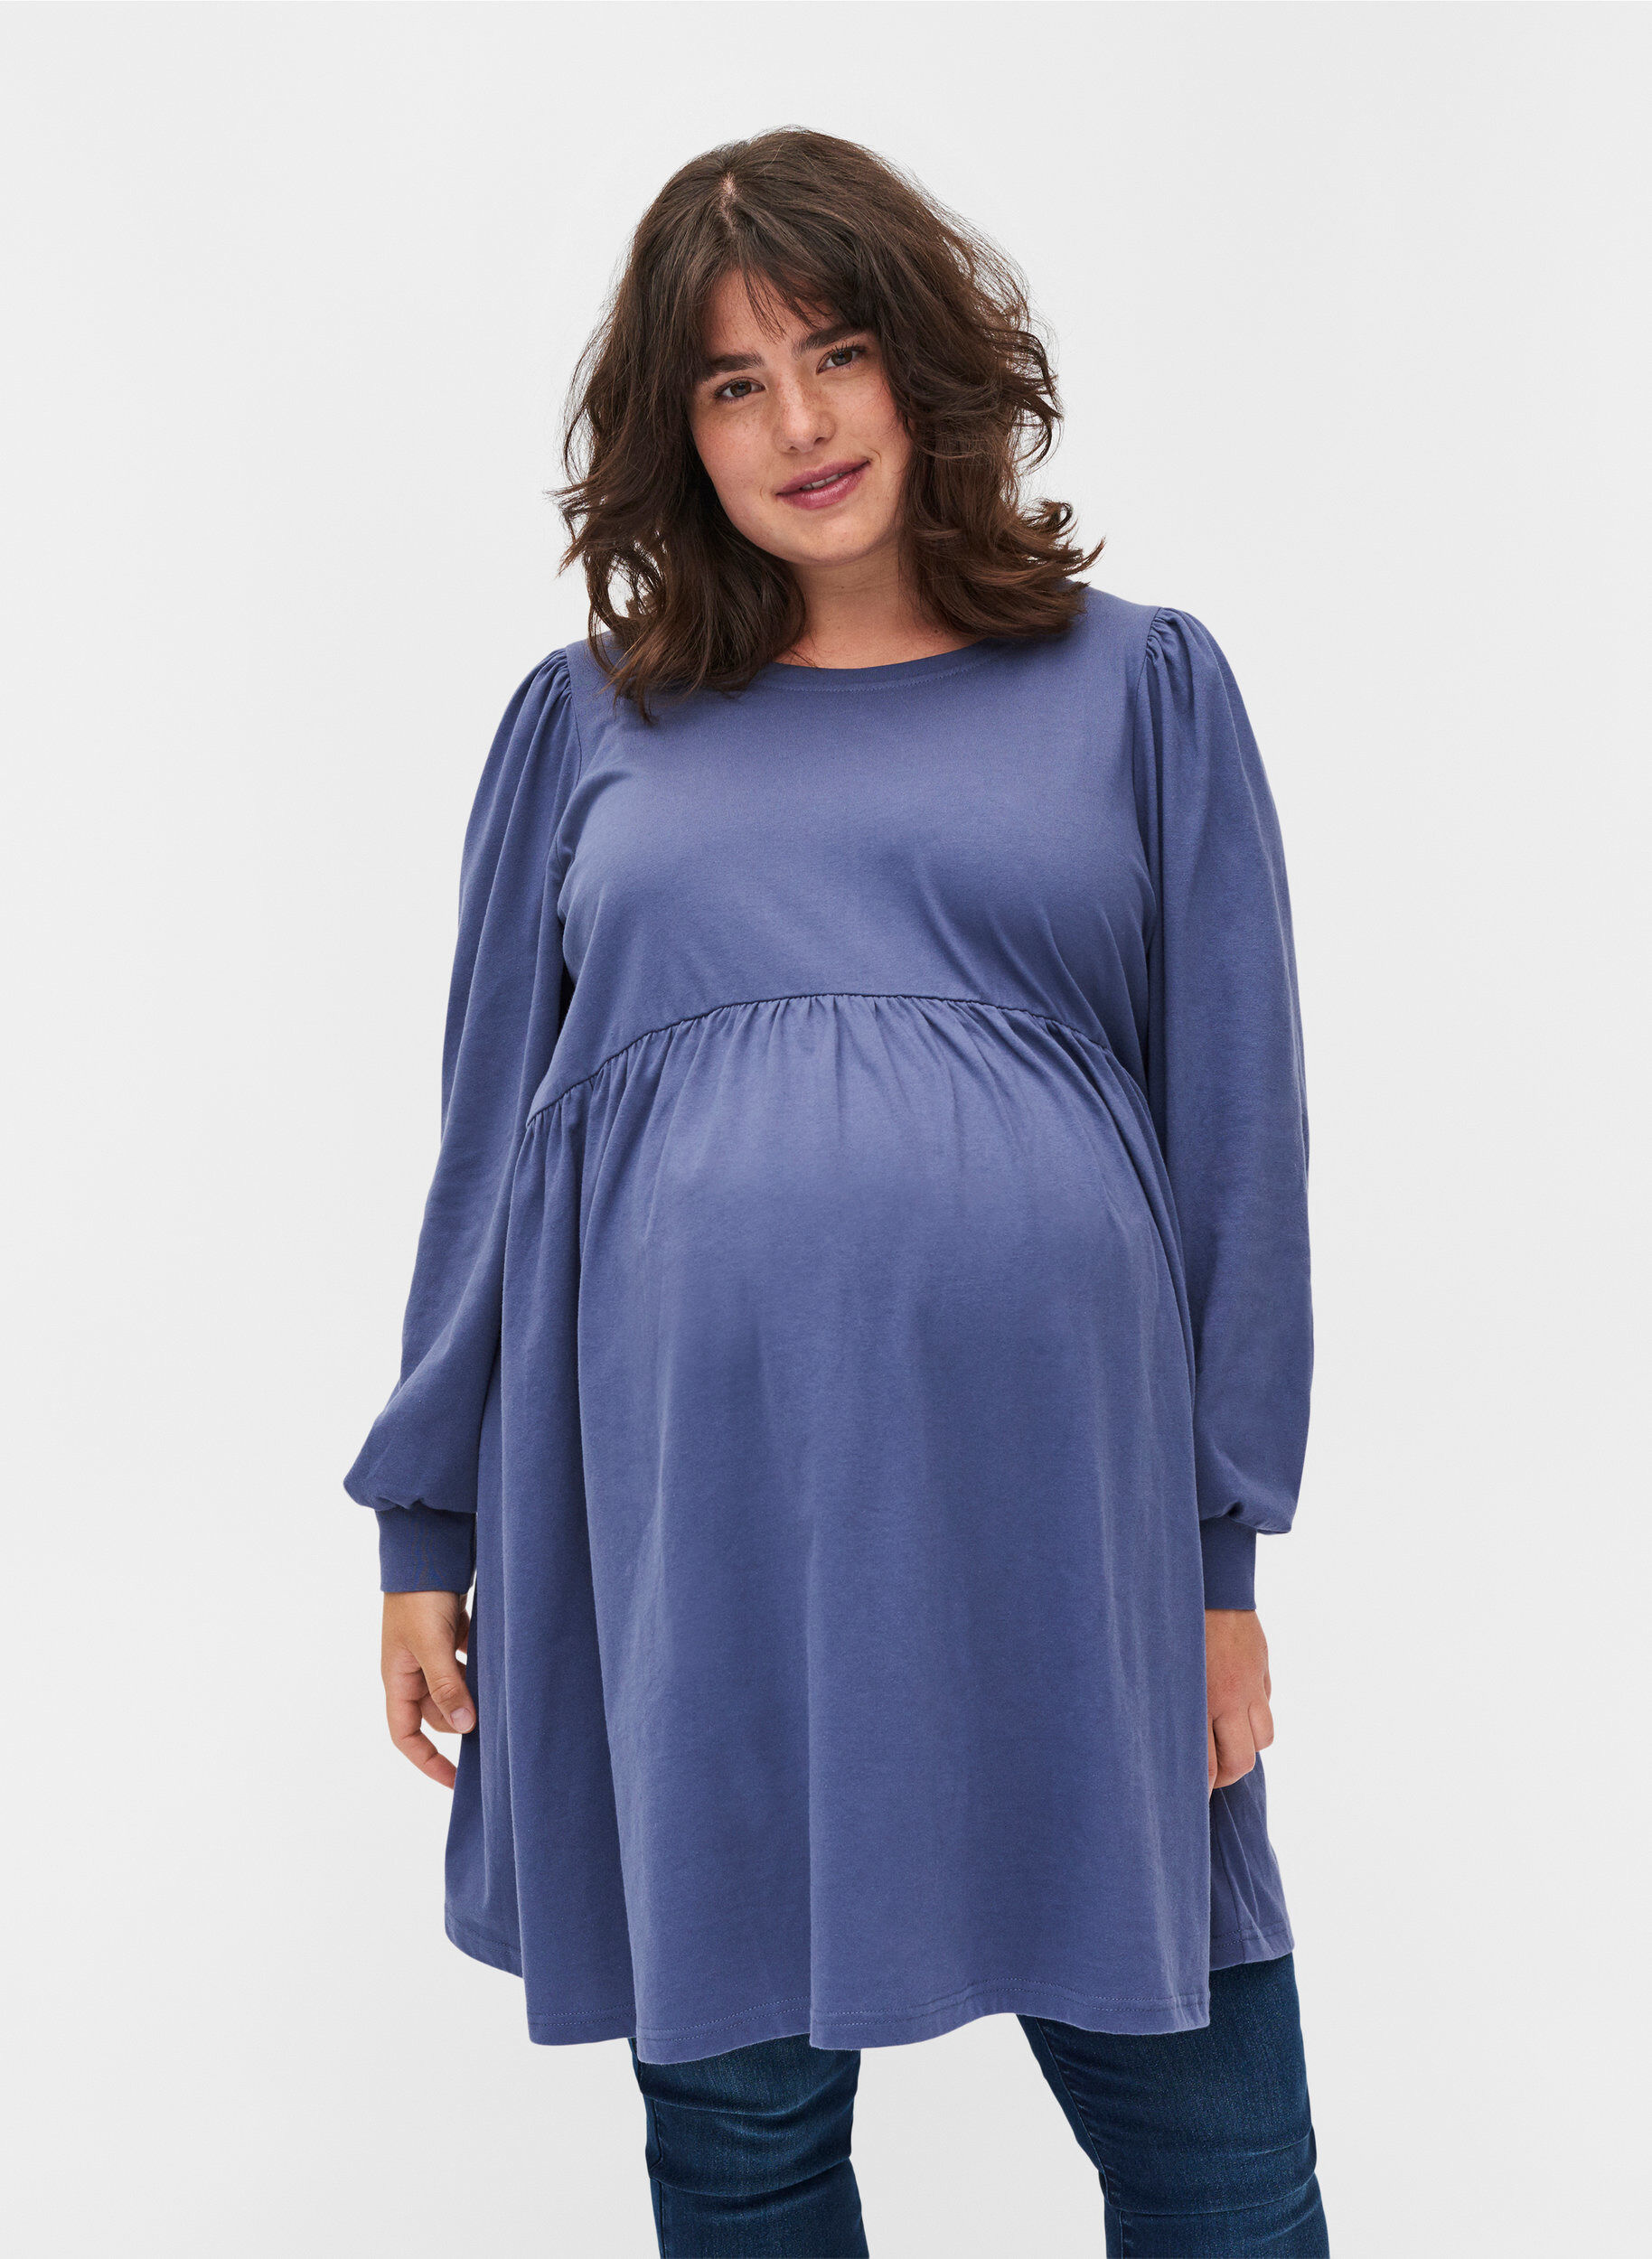 New George Asda Long Sleeve Maternity Top Grey Sizes 10,12,14,20 